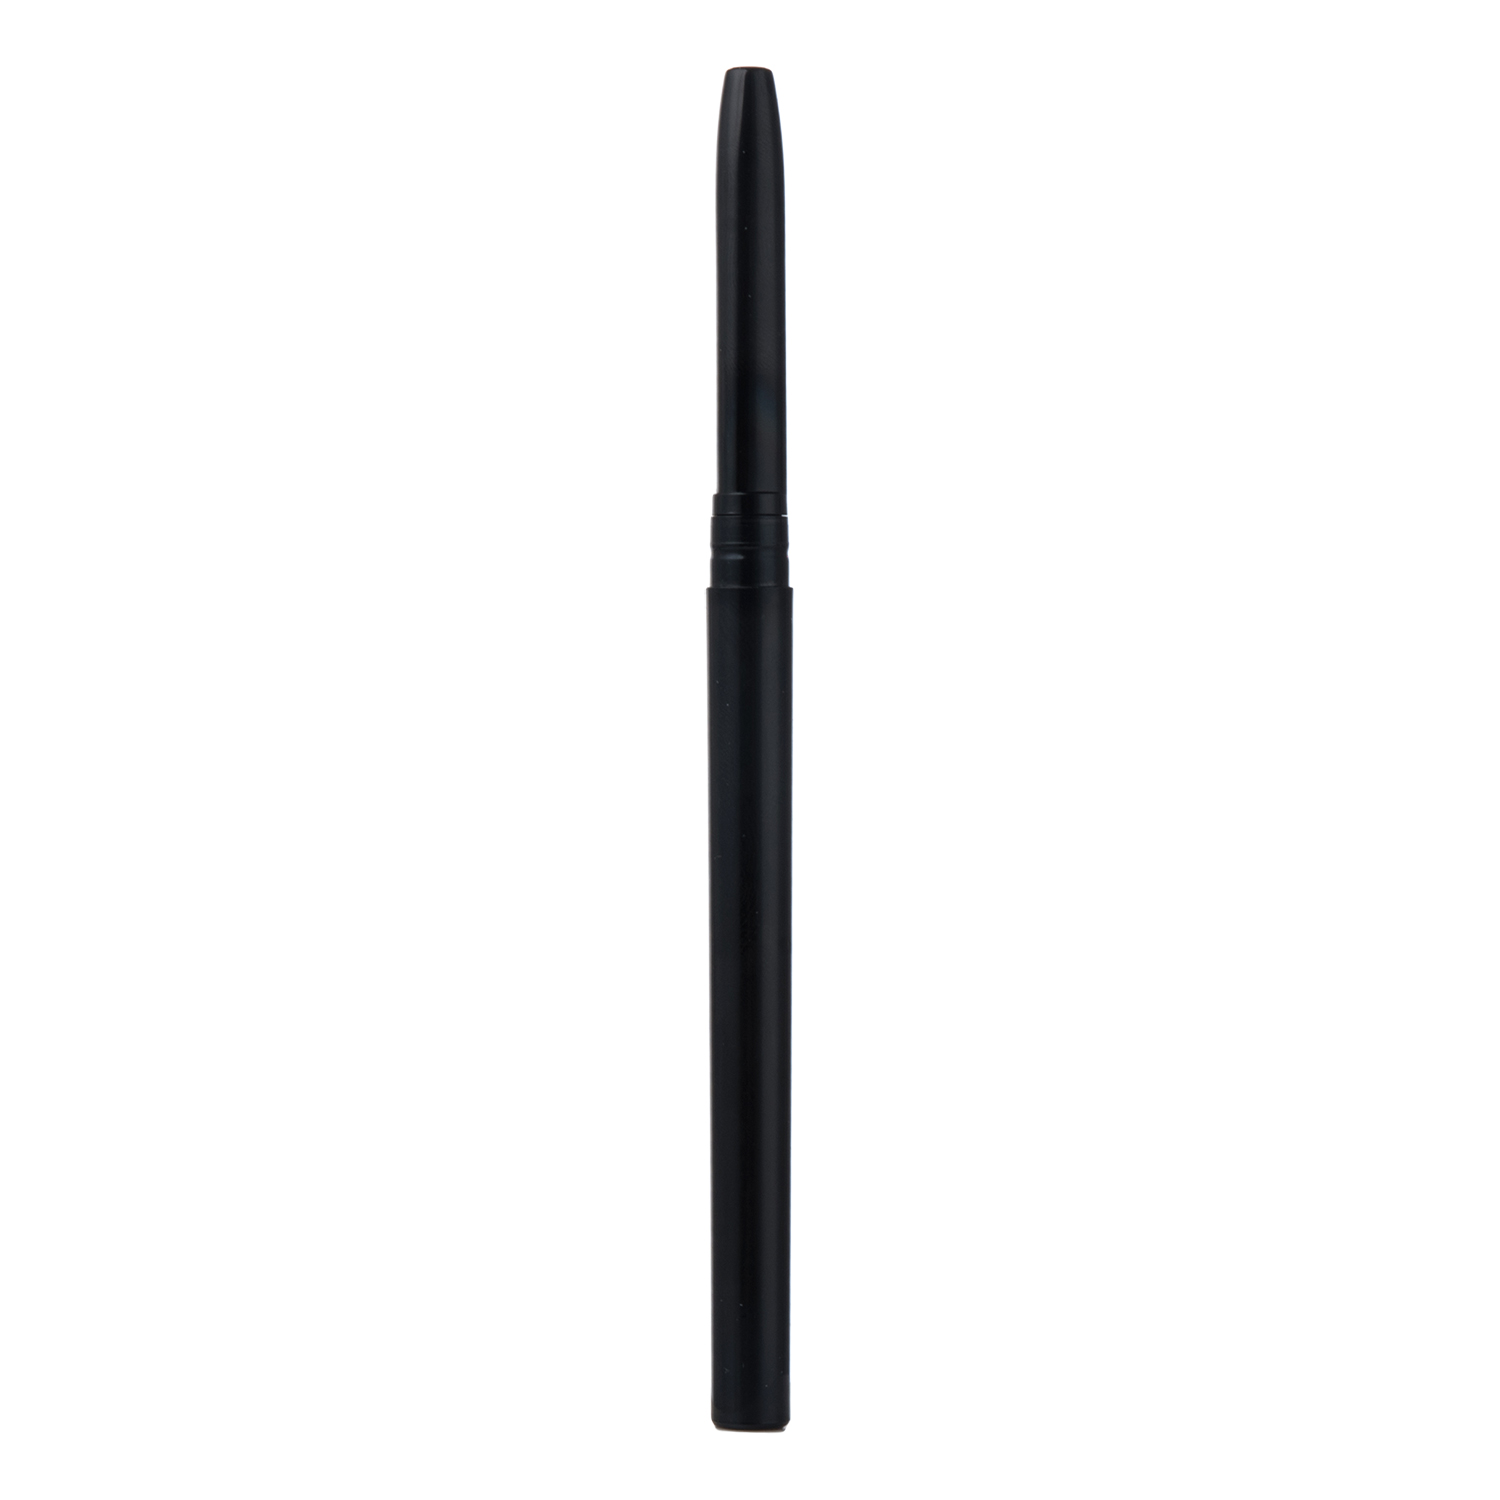 0.3g Empty Black Cosmetic Pen Applicator